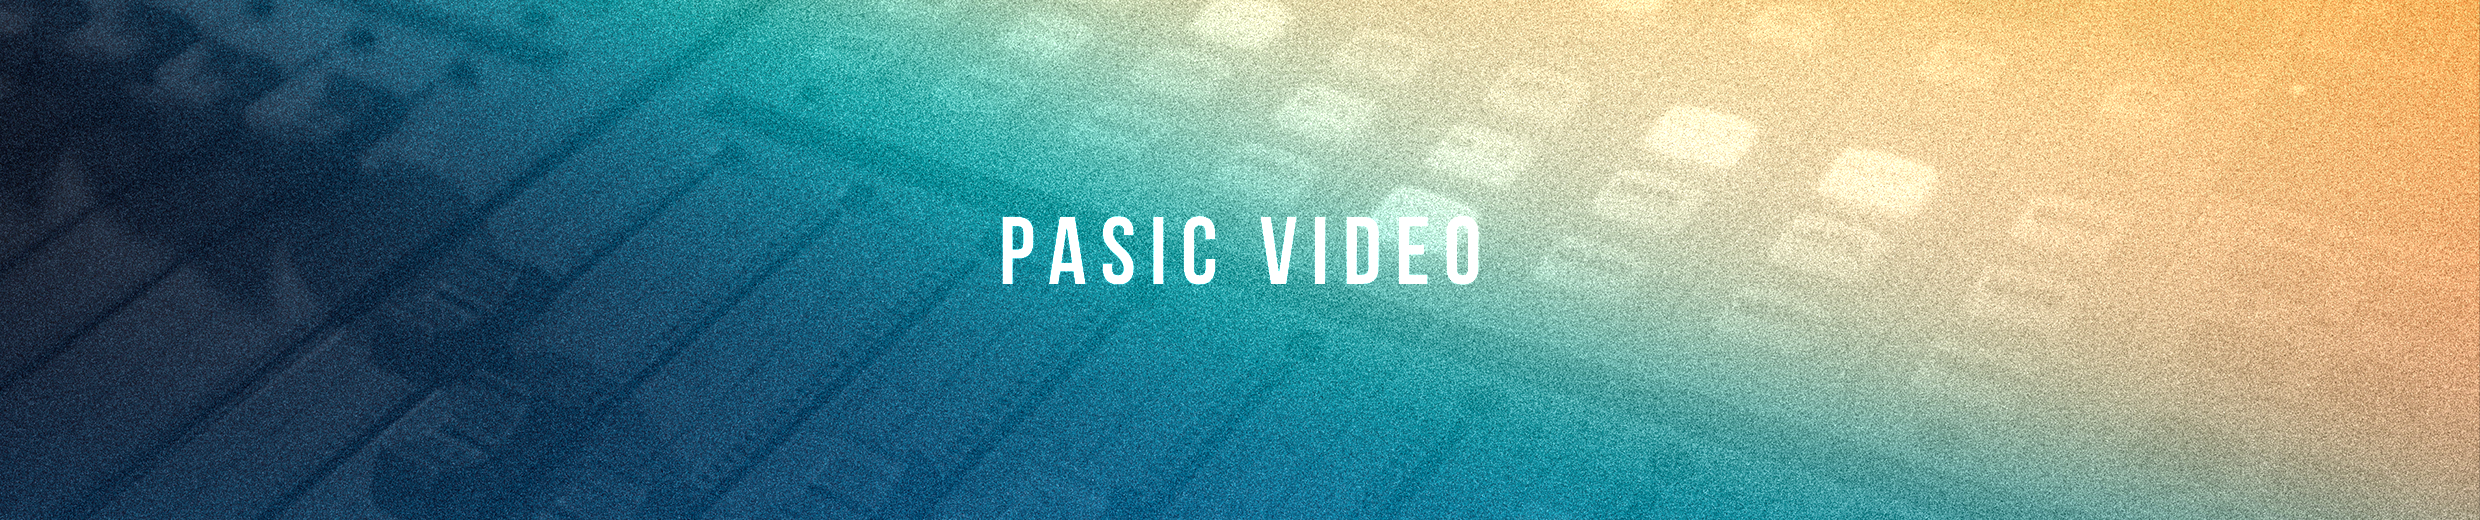 PASIC Video header image